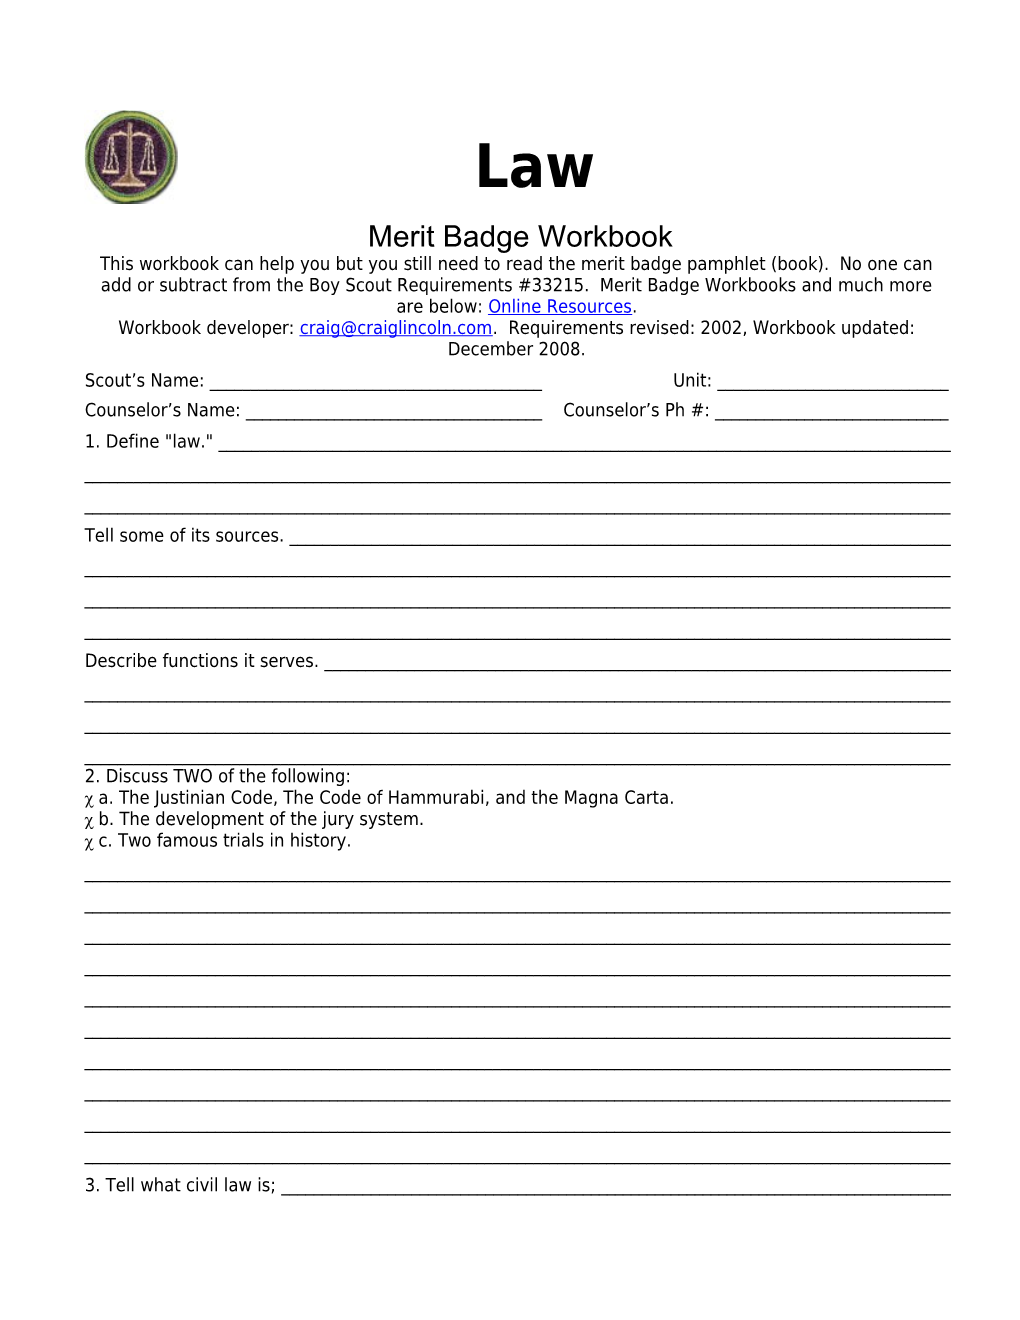 Law P. 2 Merit Badge Workbook Scout's Name: ______